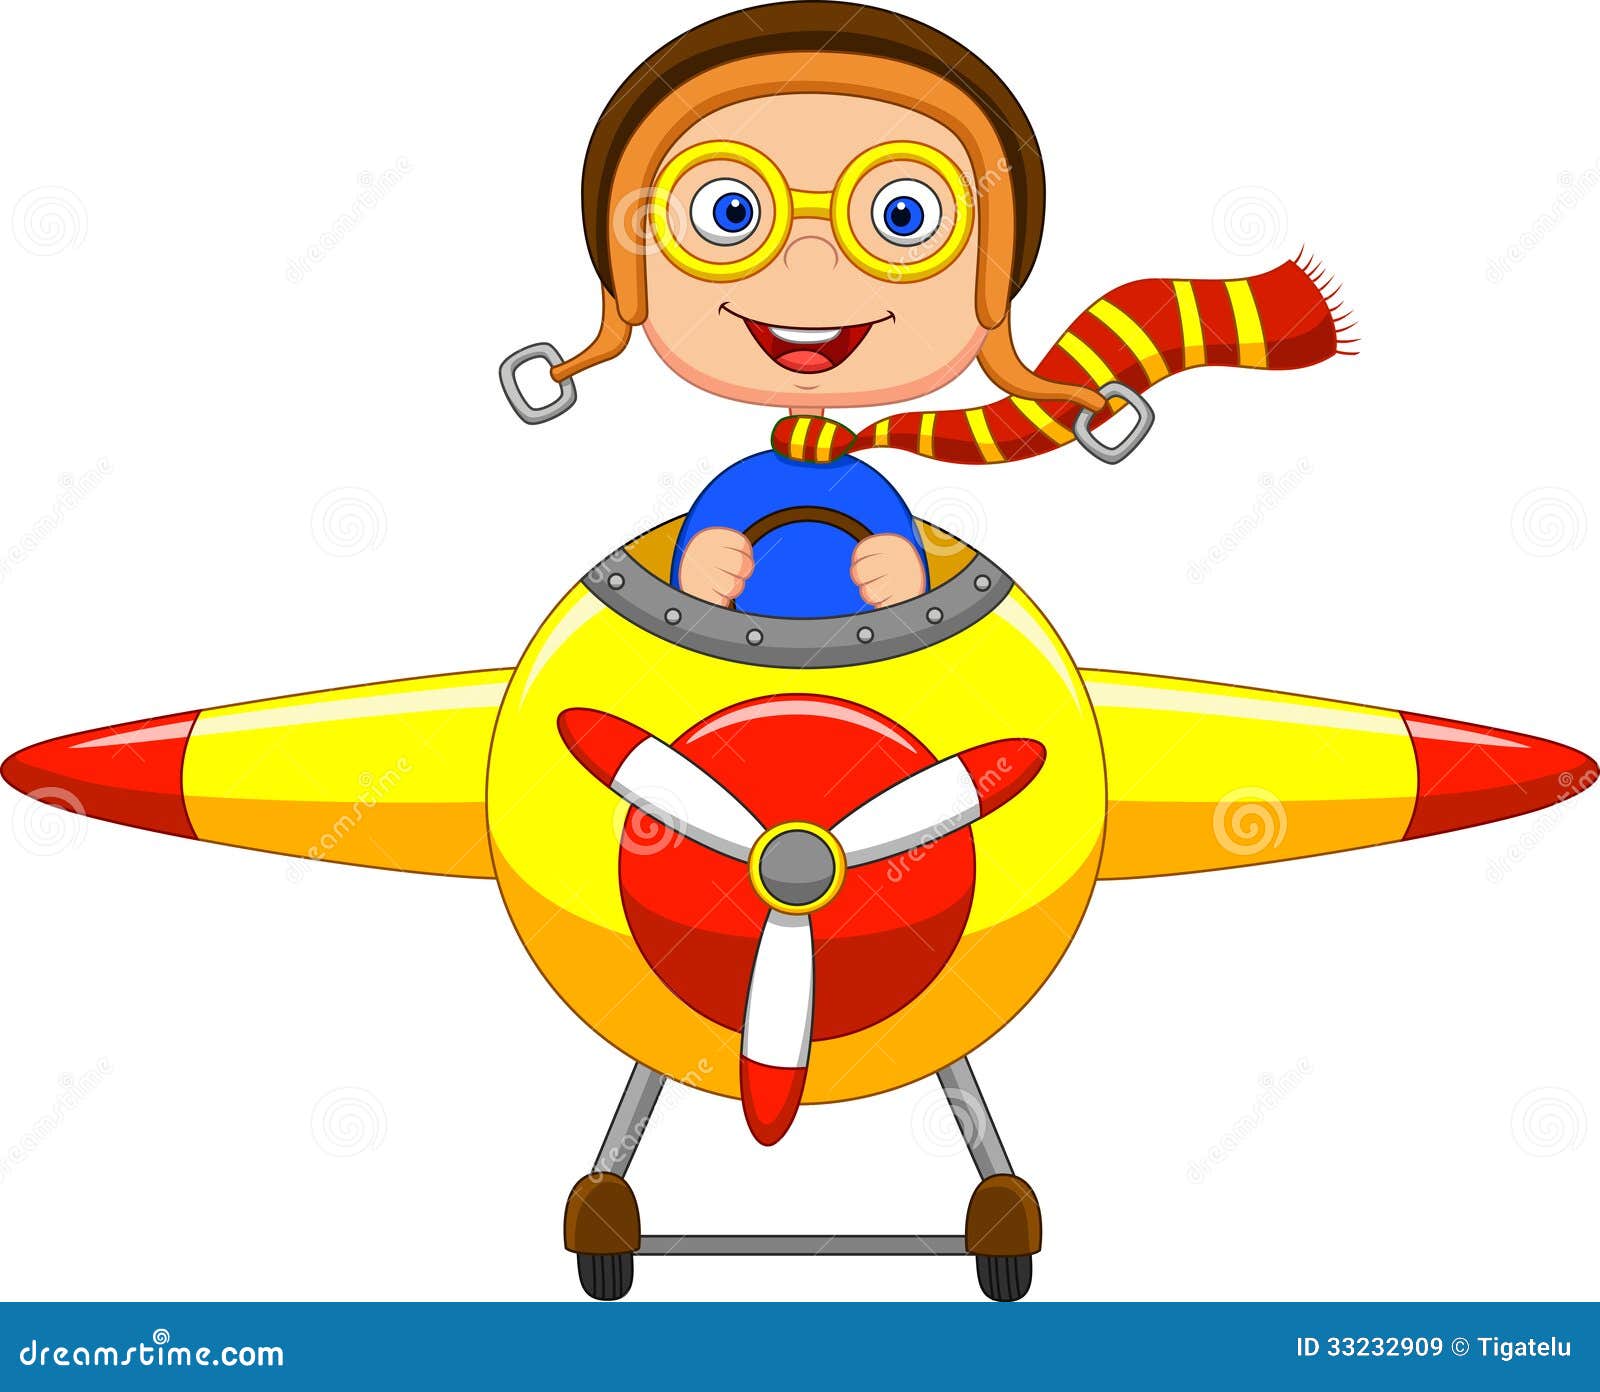 cartoon little boy operating a plane